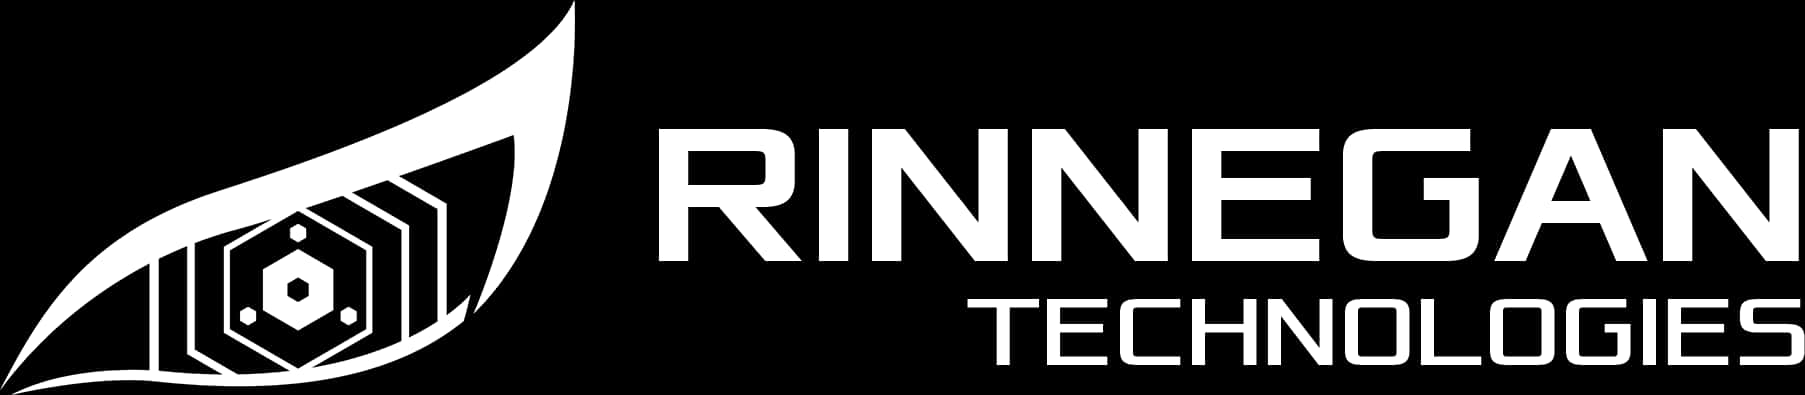 Rinnegan Technologies Logo PNG